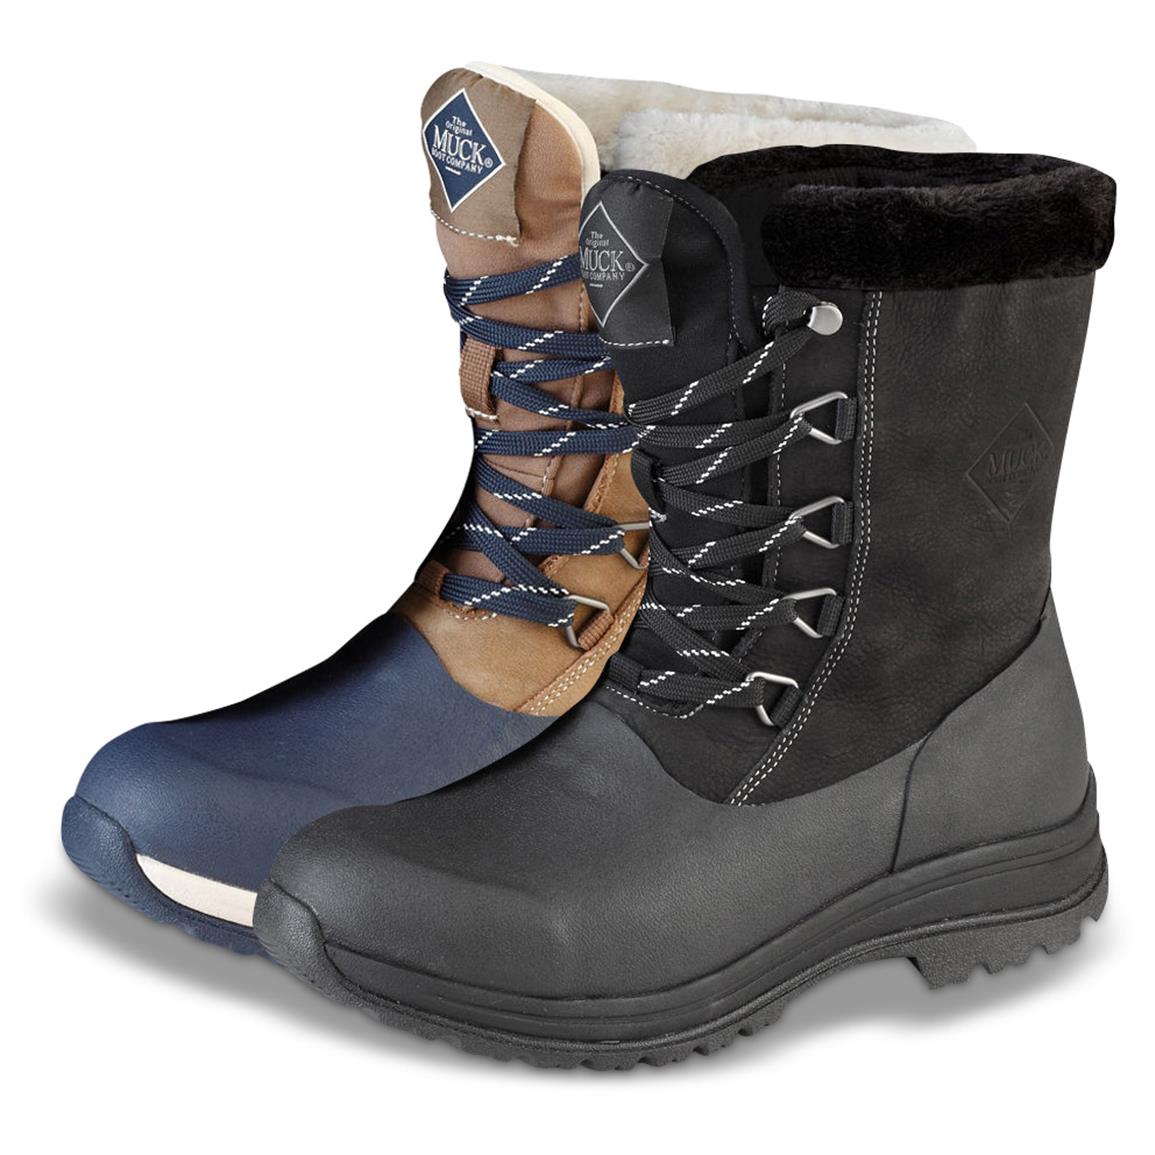 Muck Boot Women's Arctic Apres Lace Winter Boots - 675727, Rubber ...